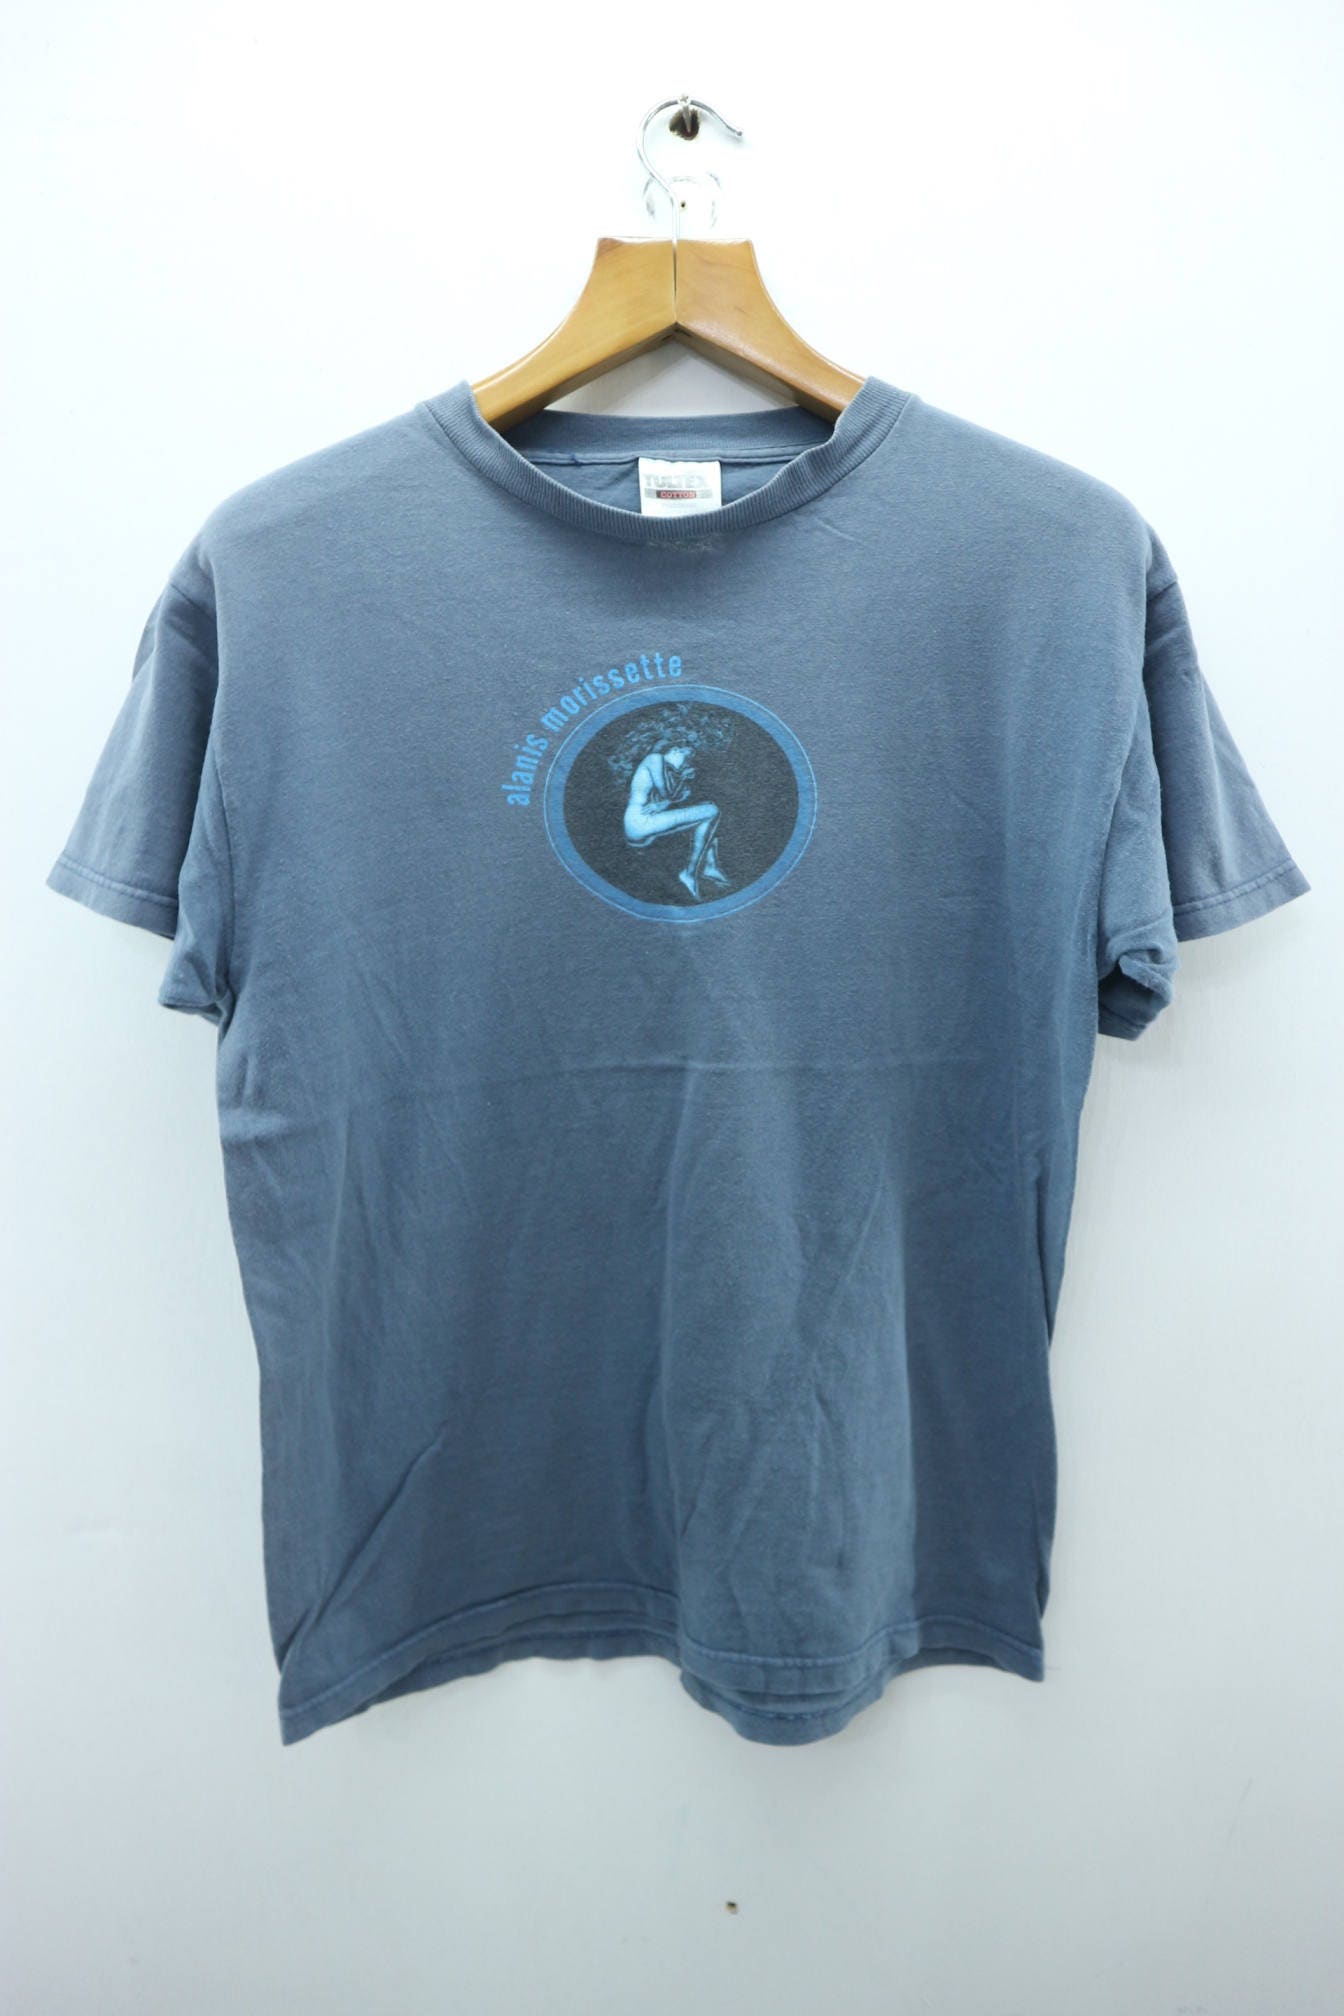 Vintage 90's Alanis Morissette T-Shirt Pop Rock Grunge | Etsy